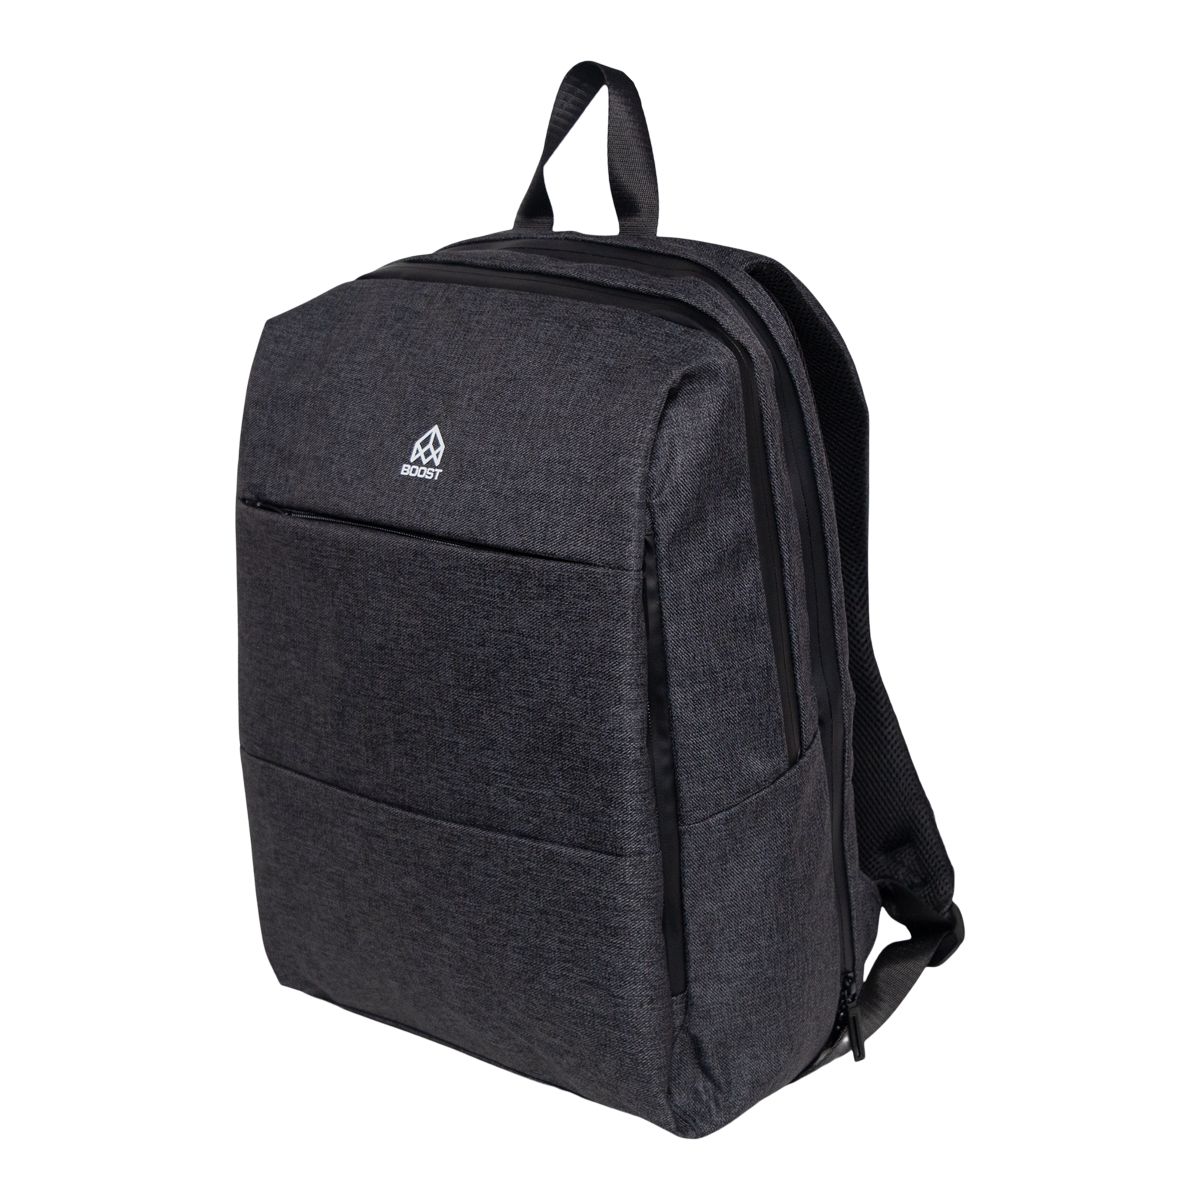 Sapphire Boost Pack Smart Bag